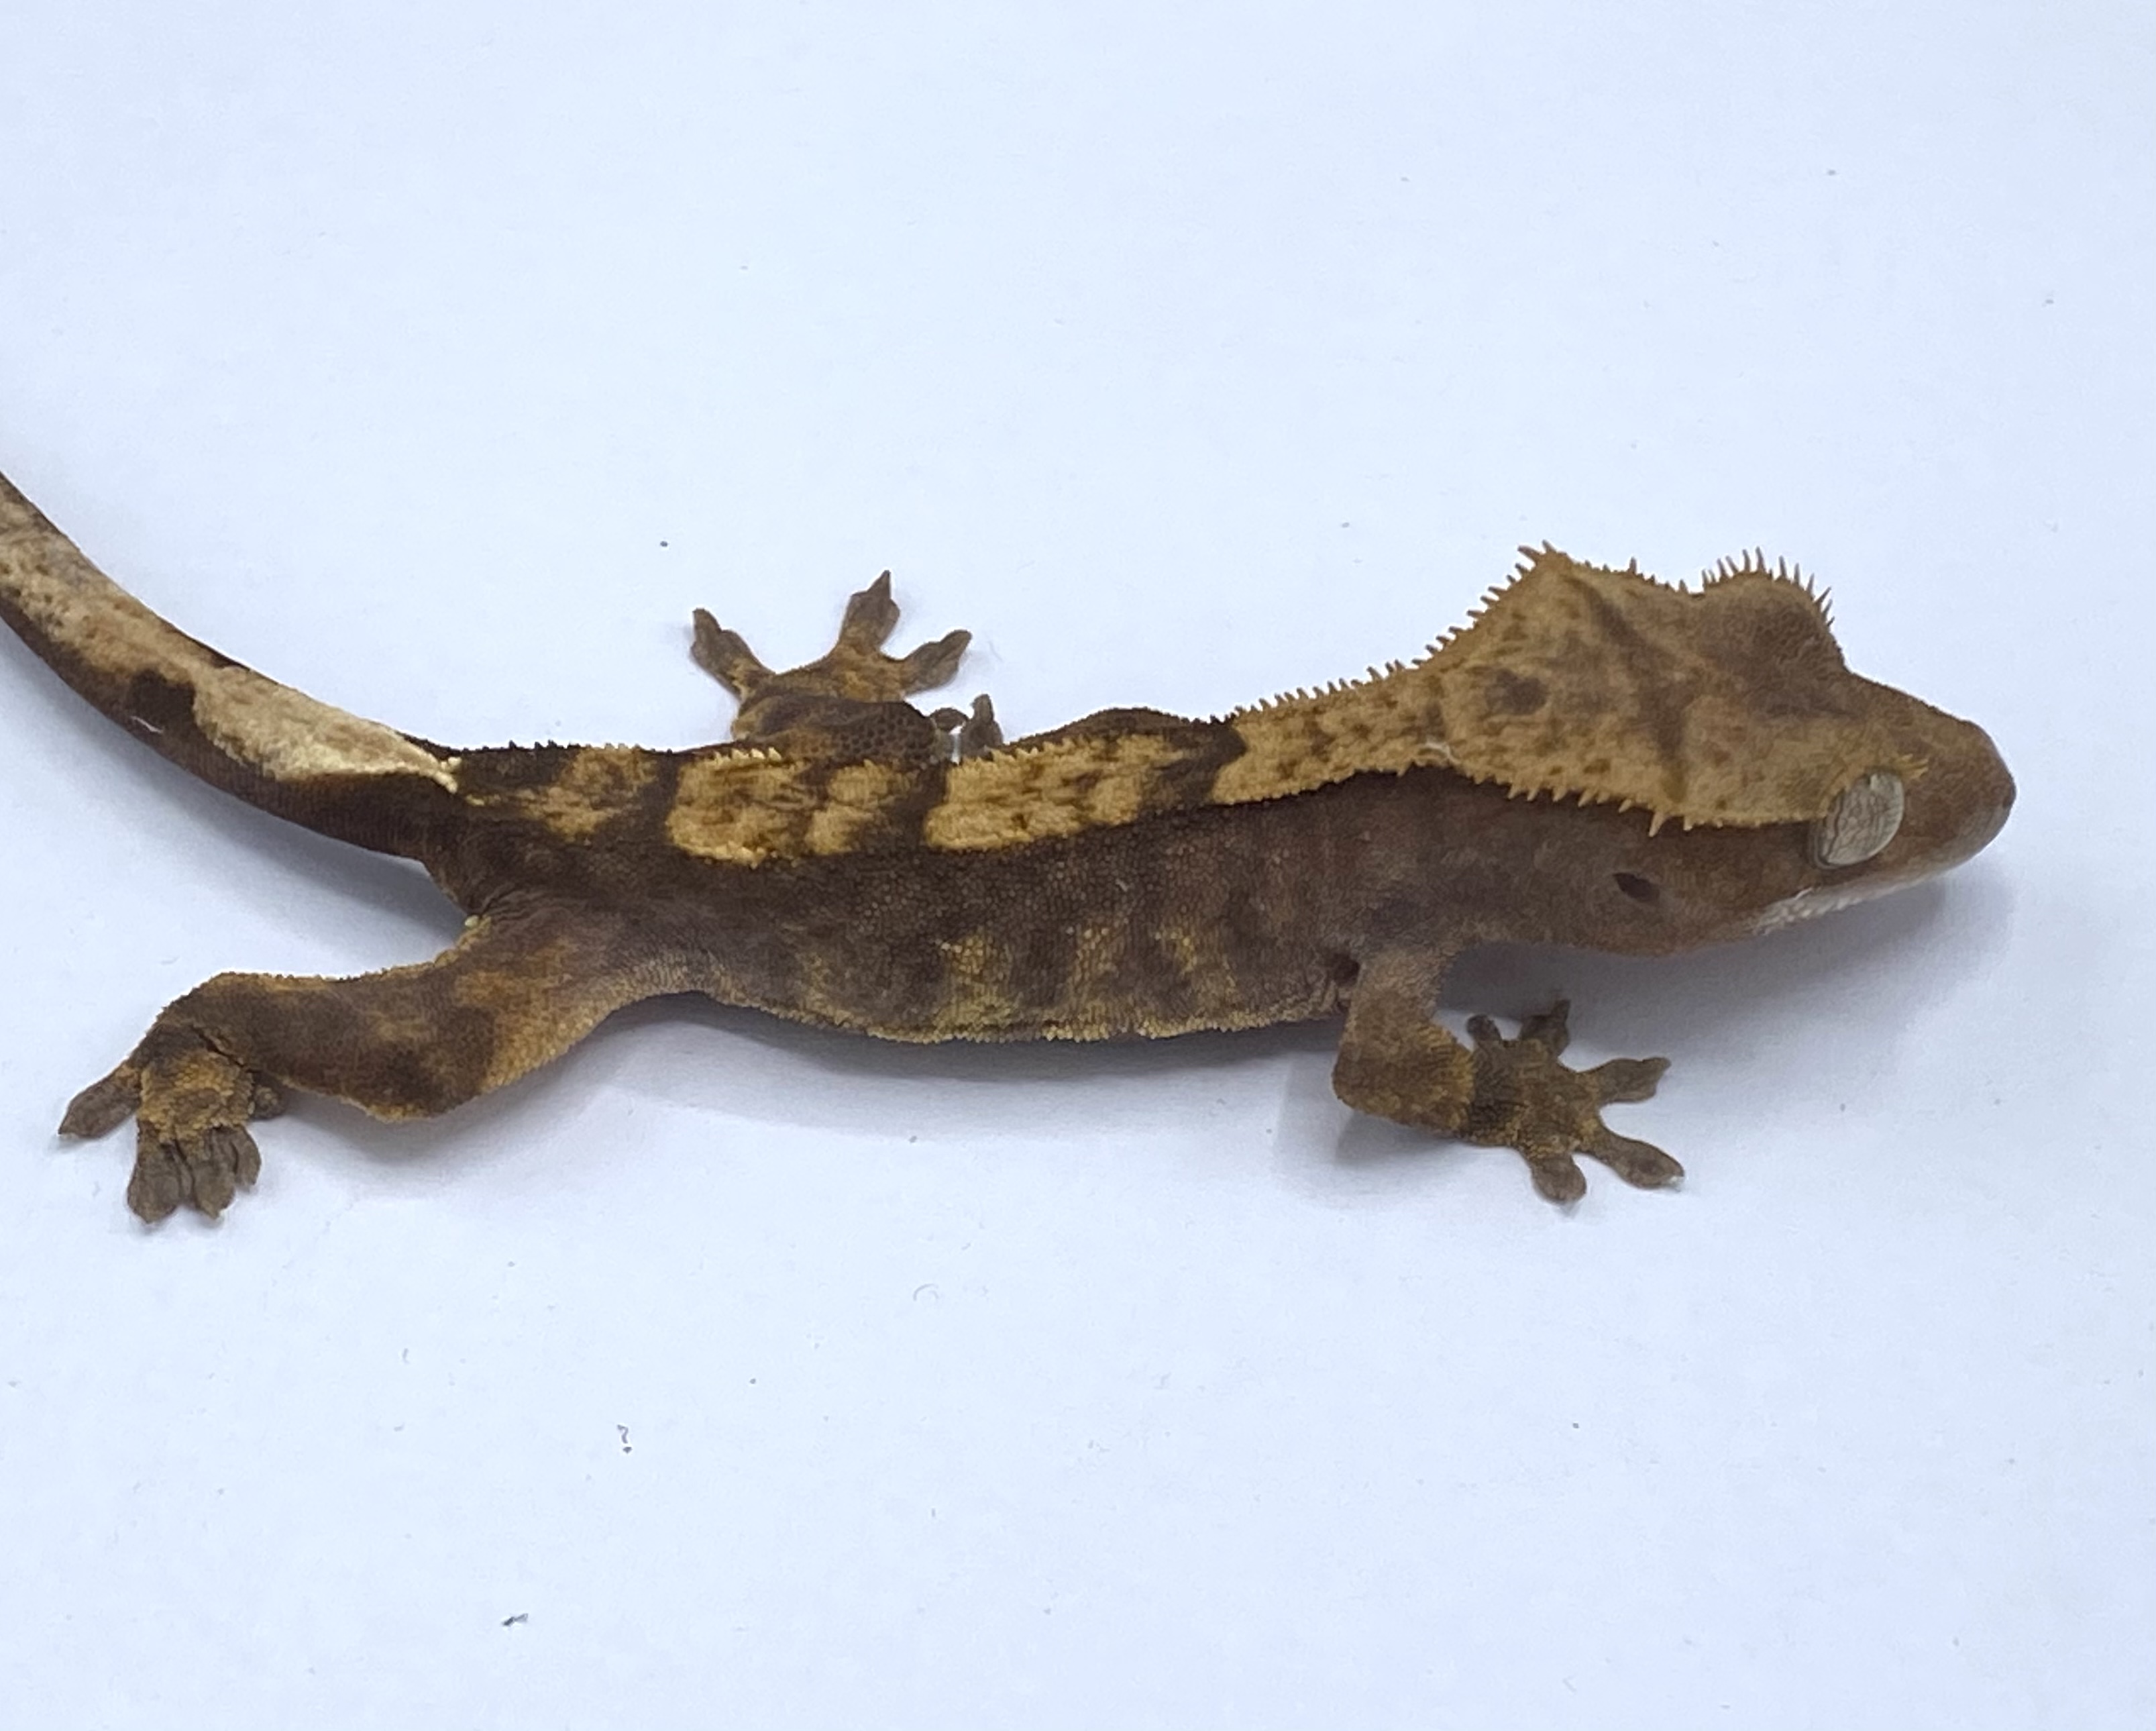 Harlequin Crested Gecko by Mitch-A-Tech Geckos